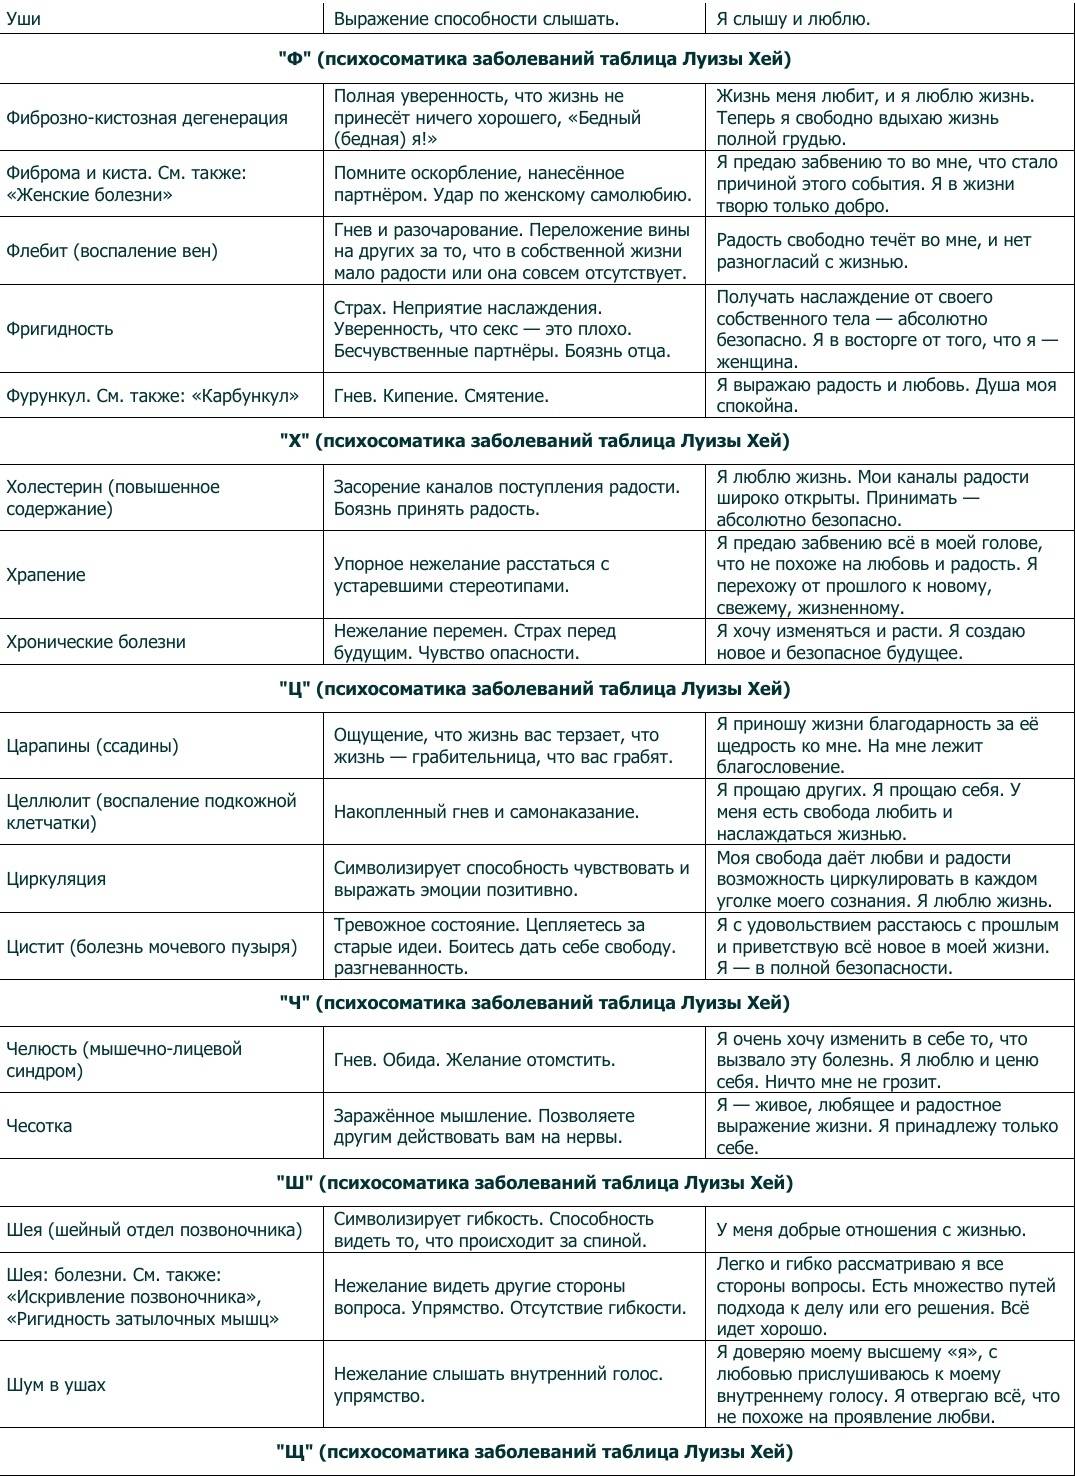 Таблица психосоматики заболеваний луизы хей